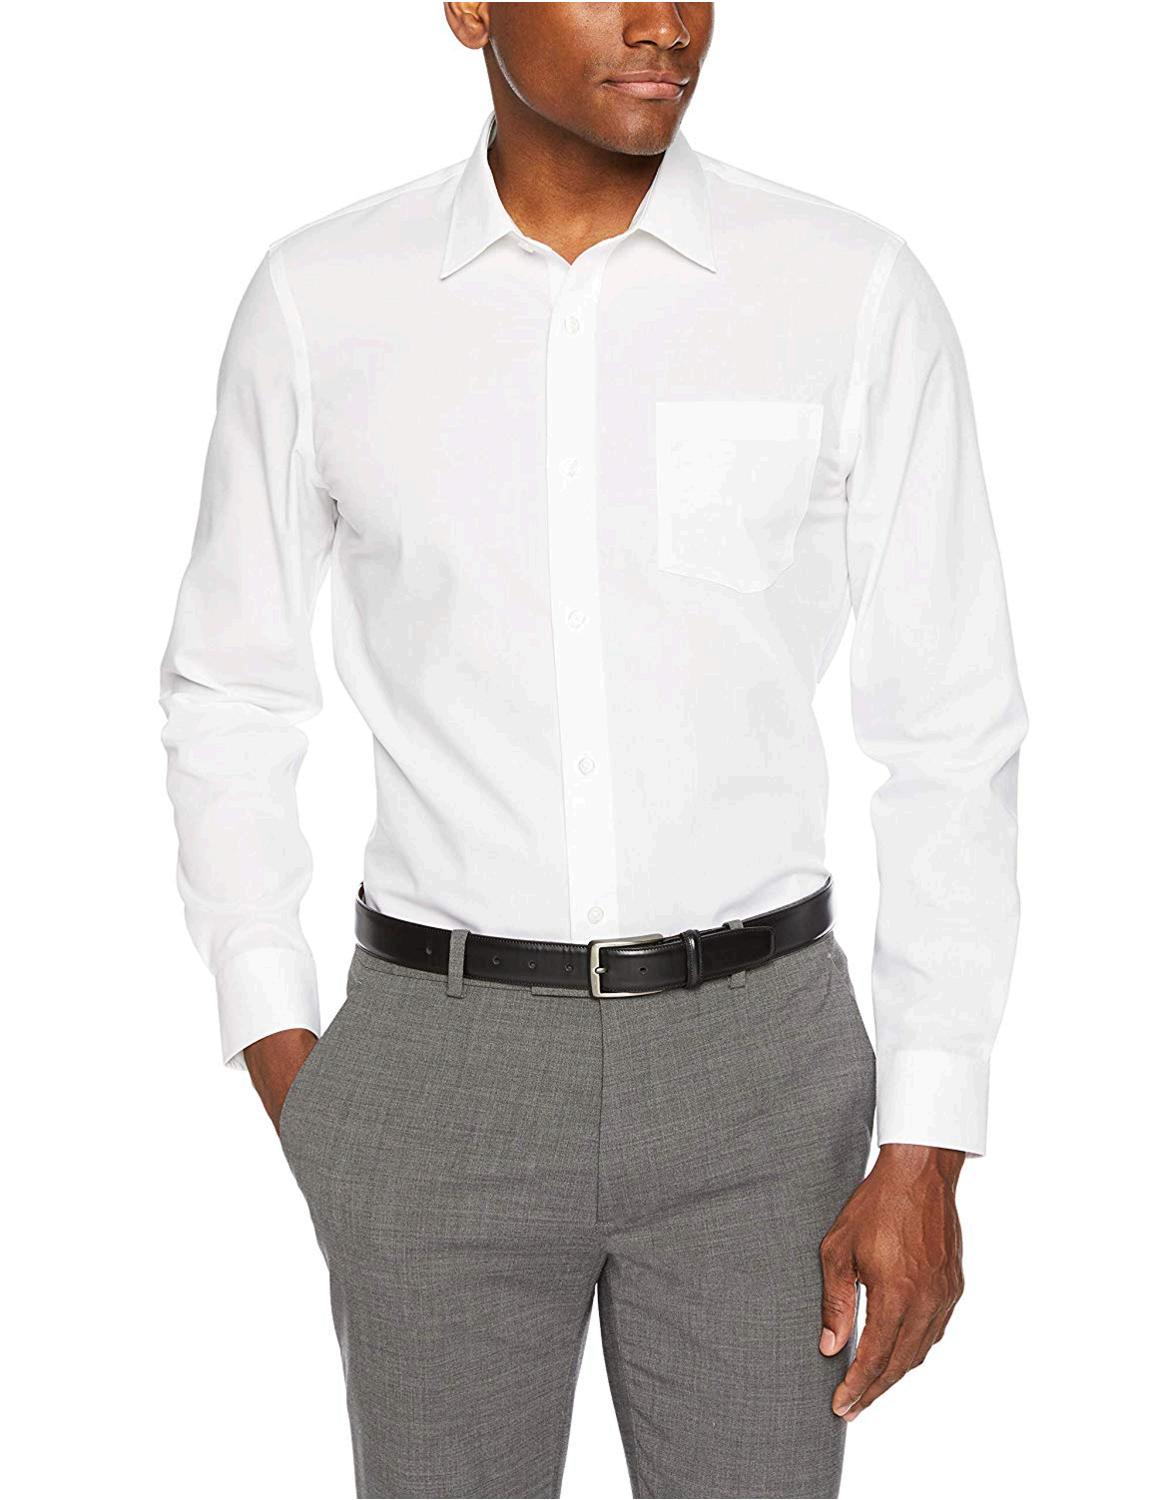 Essentials Men's Slim-Fit Wrinkle-Resistant Long-Sleeve, White, Size 17 ...